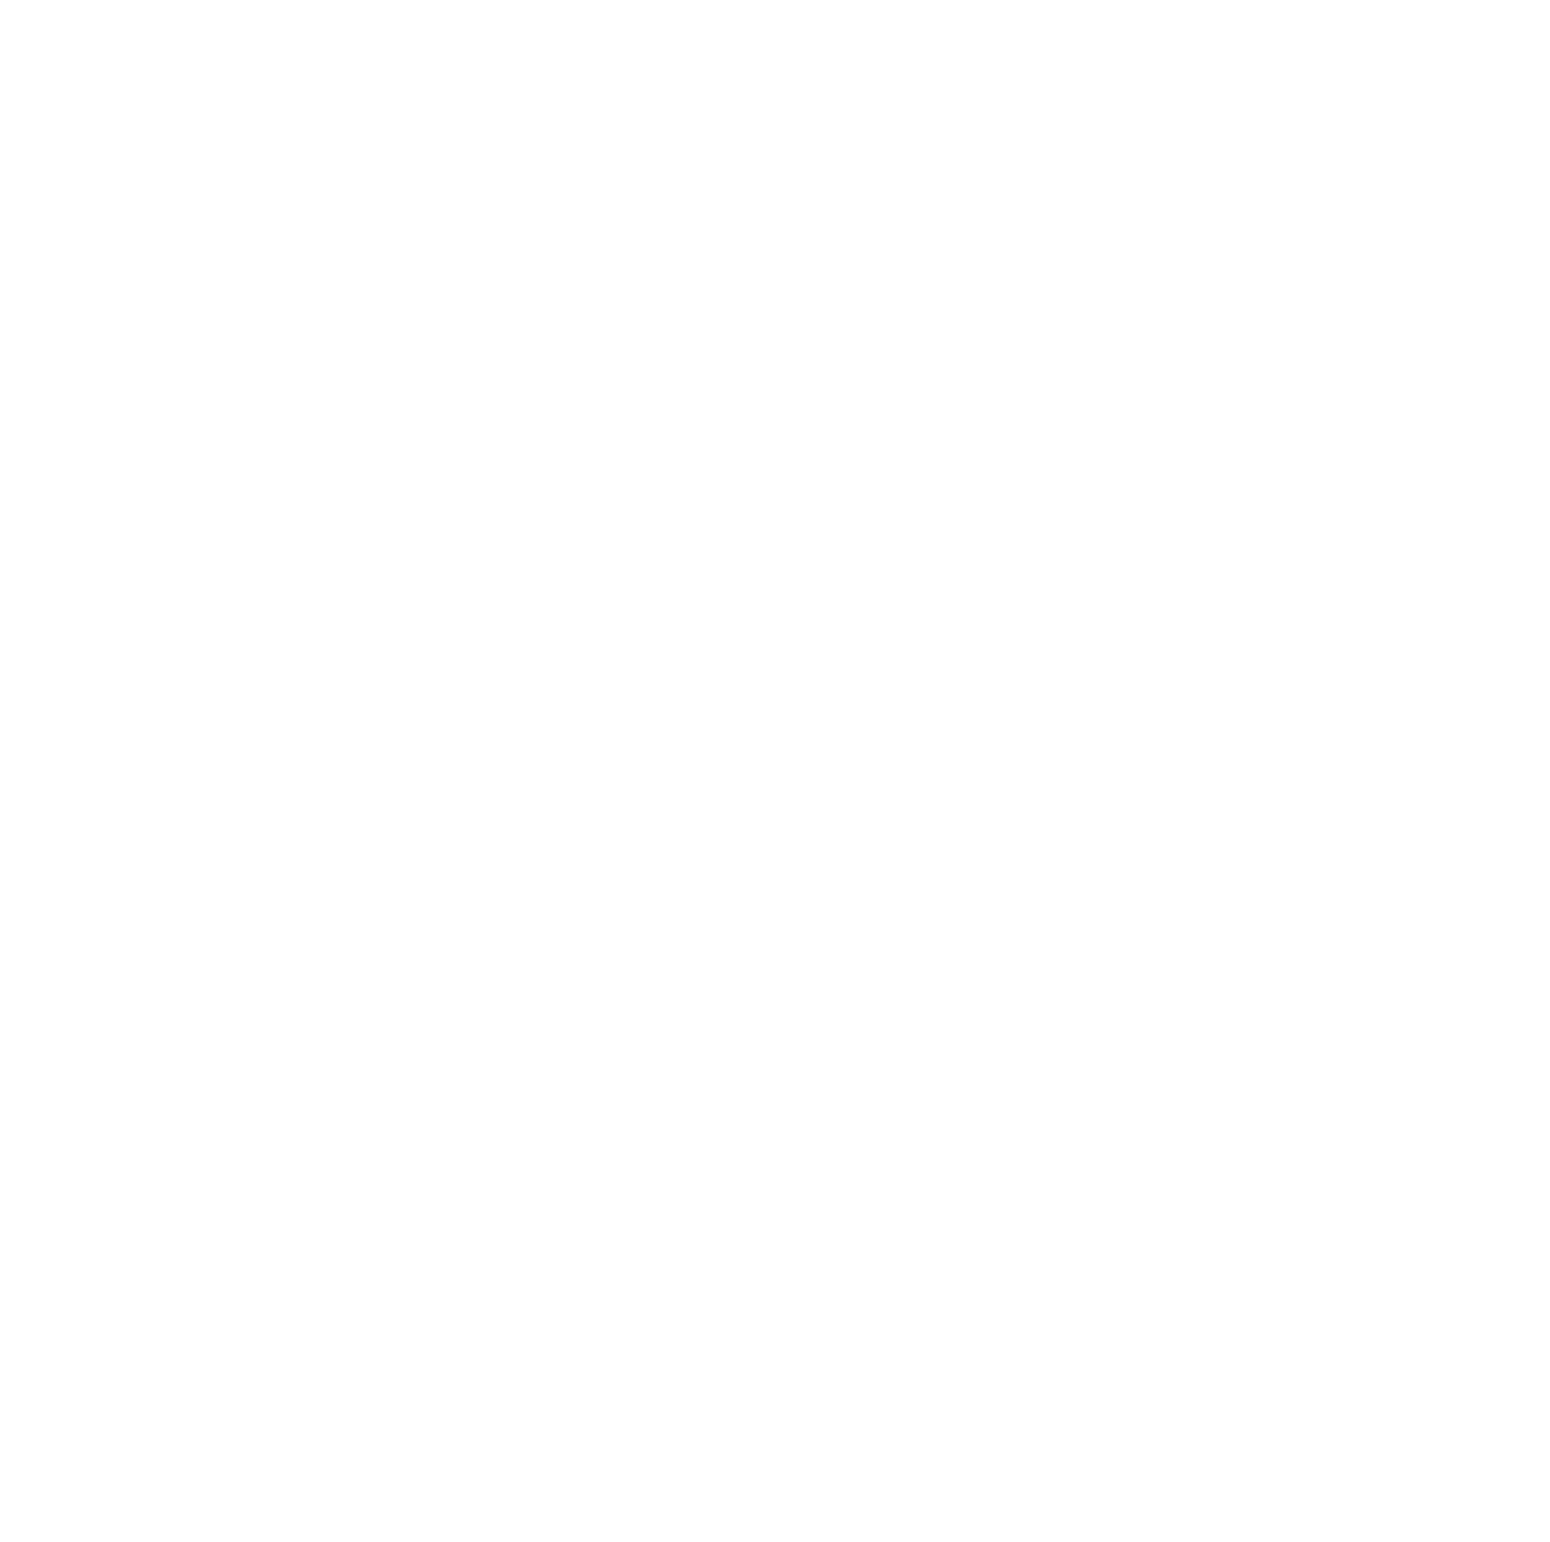 Analogue Holdings (ATAL) logo pour fonds sombres (PNG transparent)